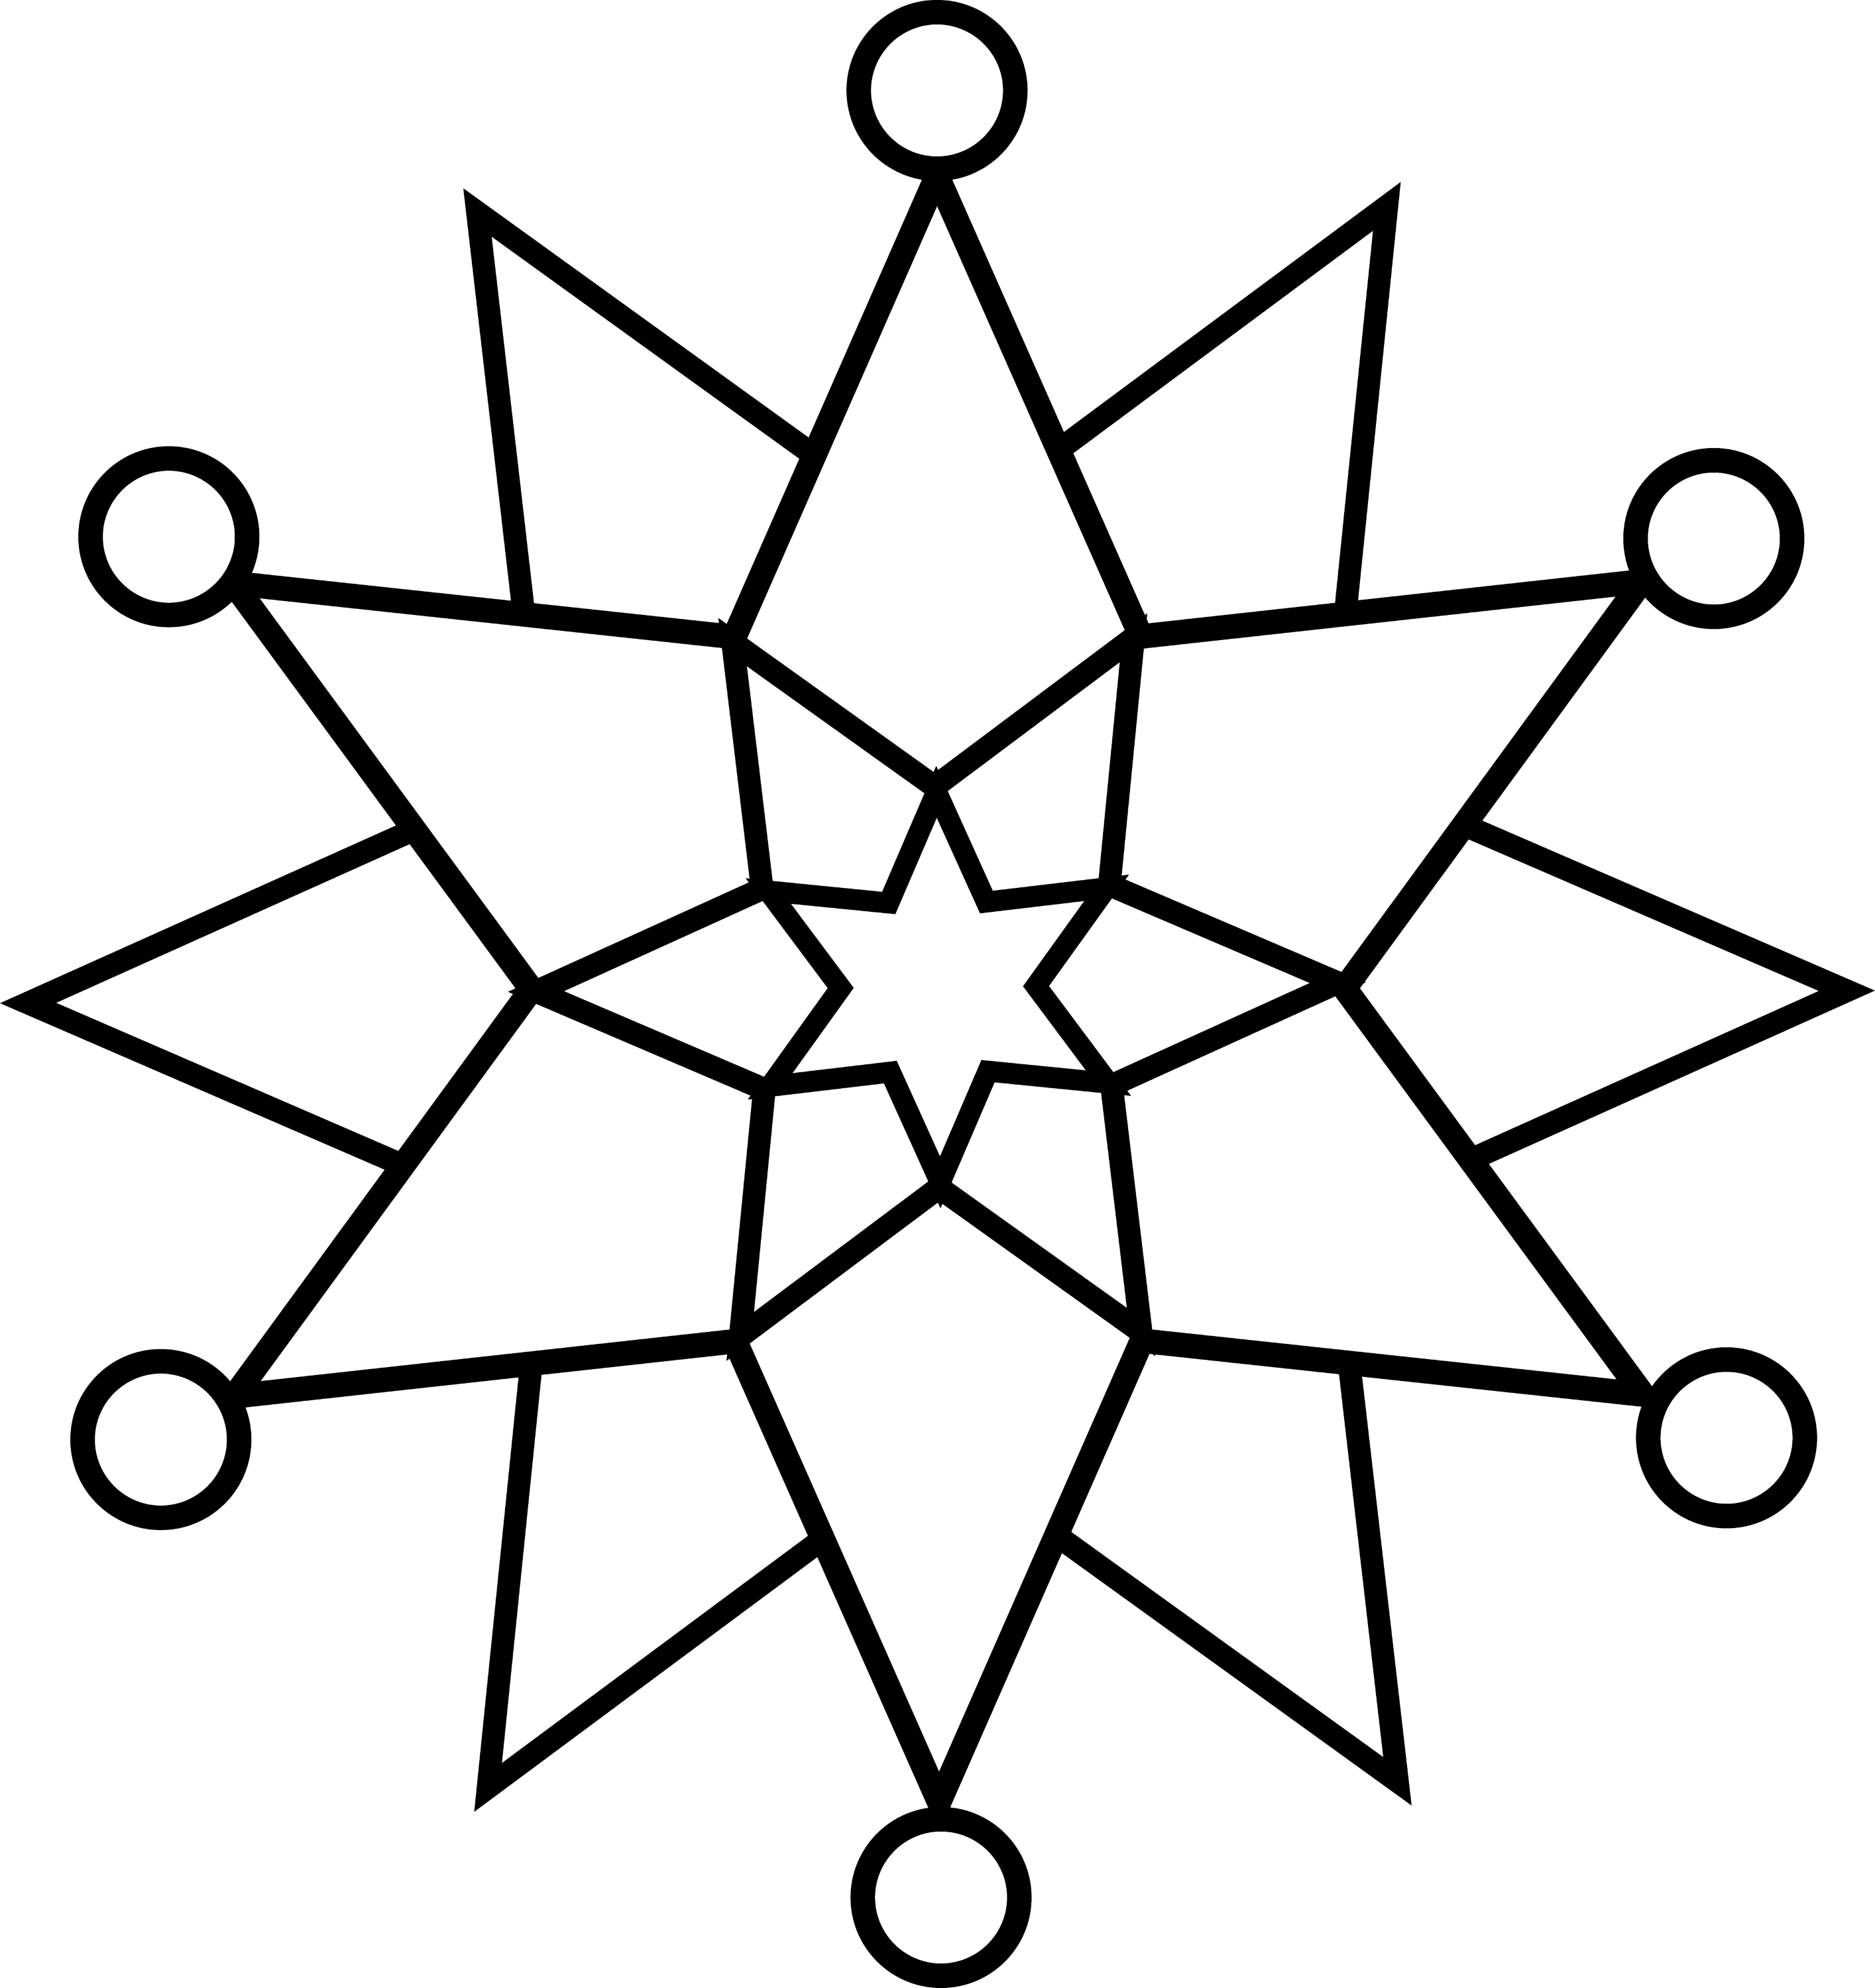 free black and white snowflake clipart - photo #31